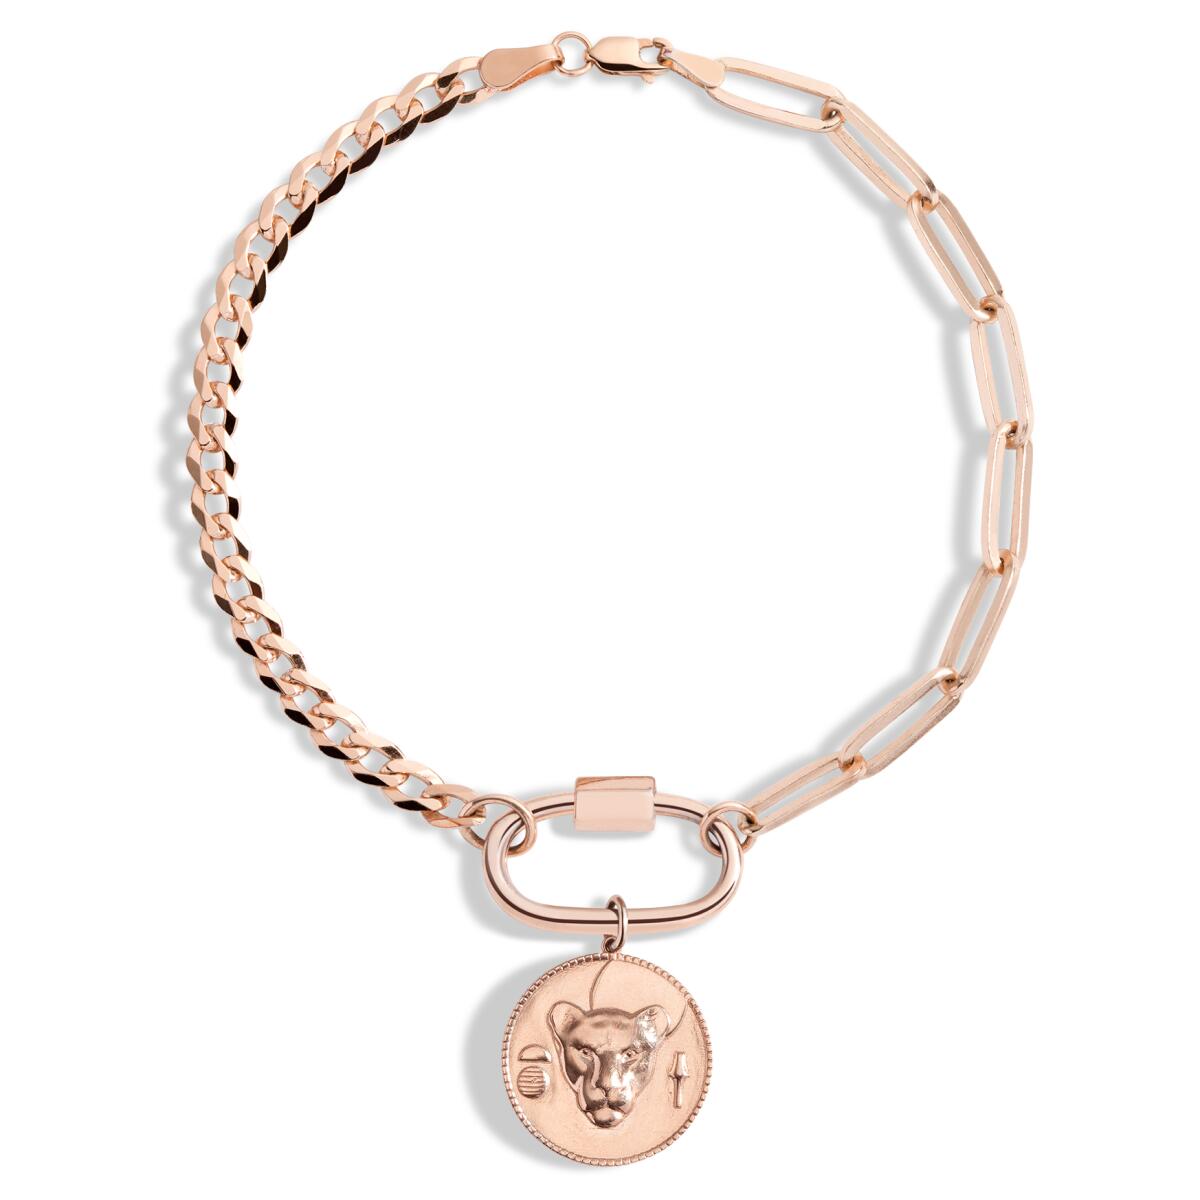 A Lioness Collection rose gold bracelet.